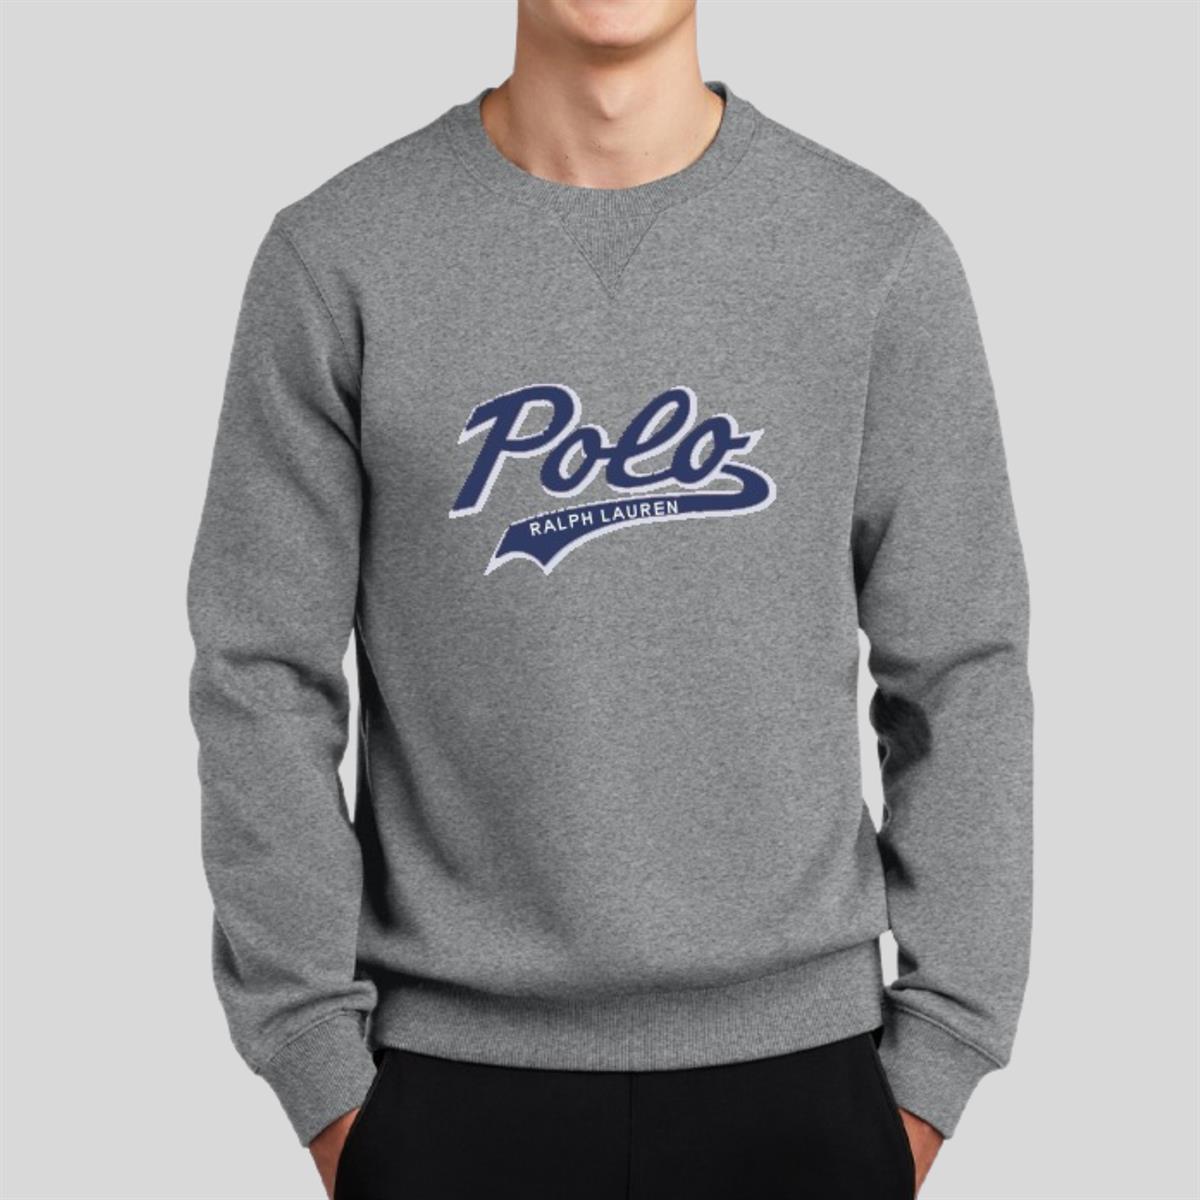 Polo Print Sweatshirt for Men's